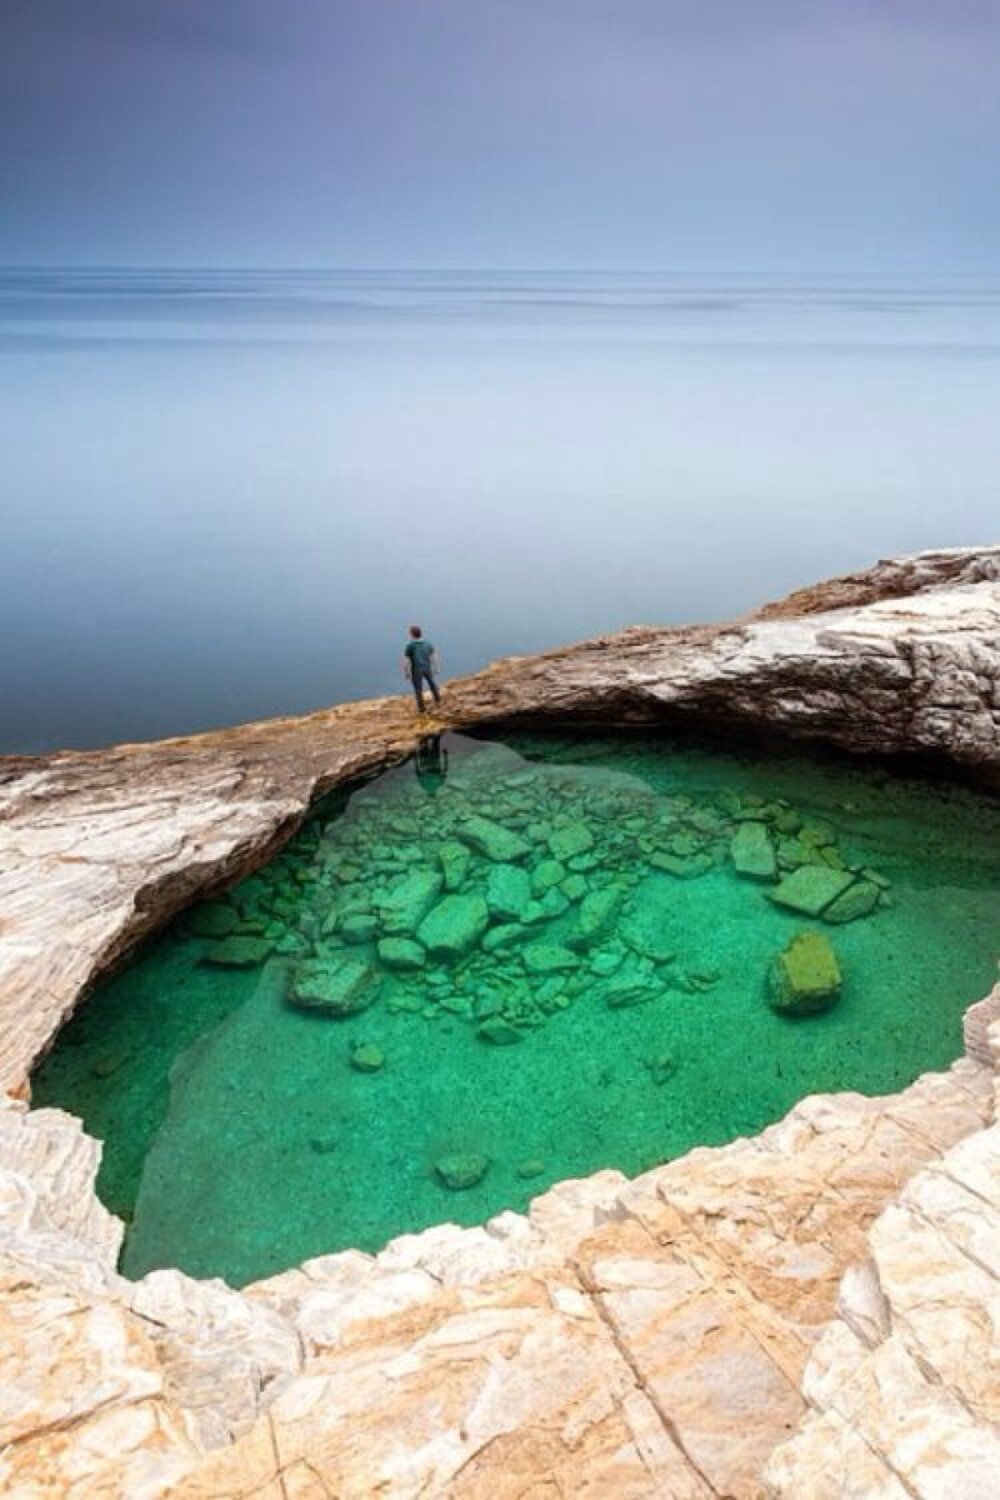 这个著名希腊海滩天然泳场Green Hole | Greece by Evgeni Dinev